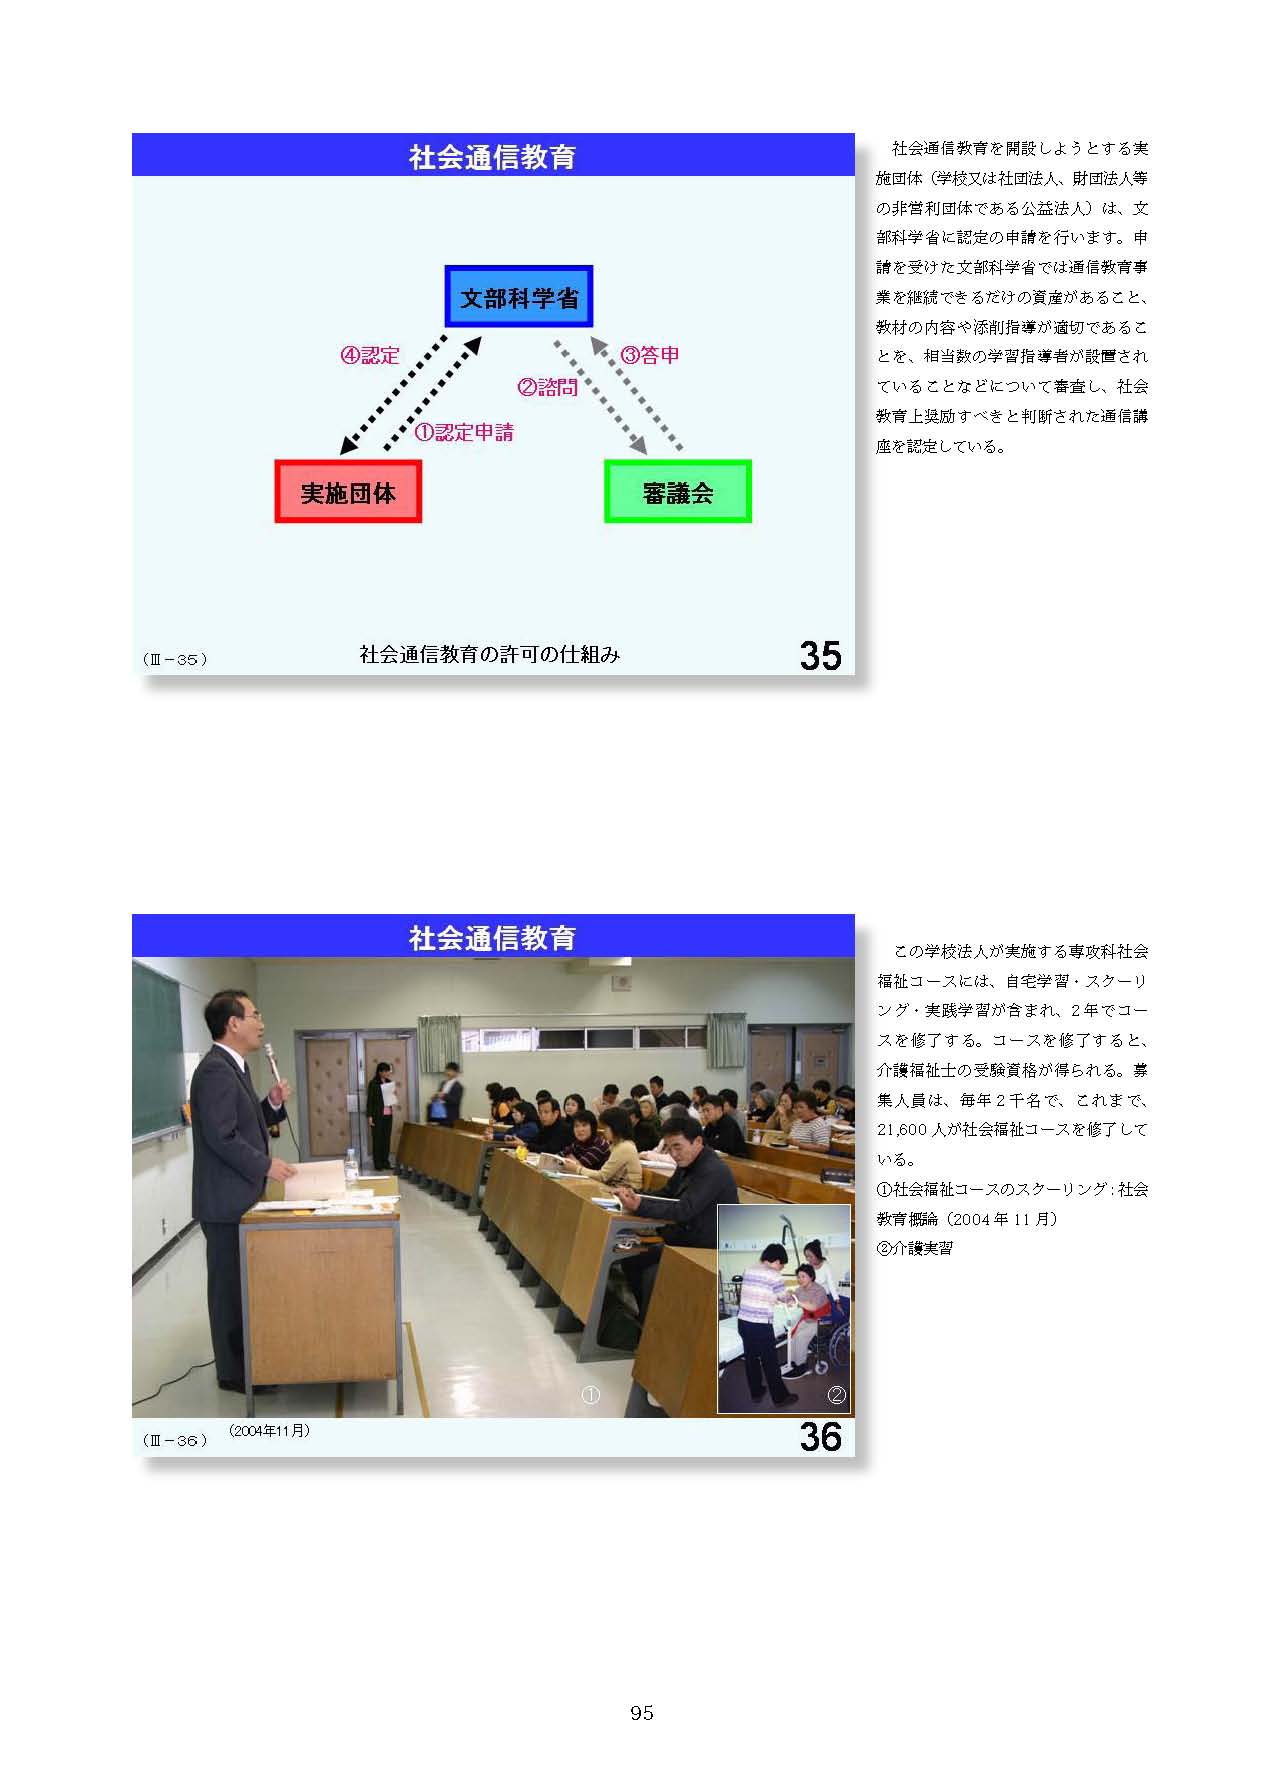 �V　日本の社会教育の概要